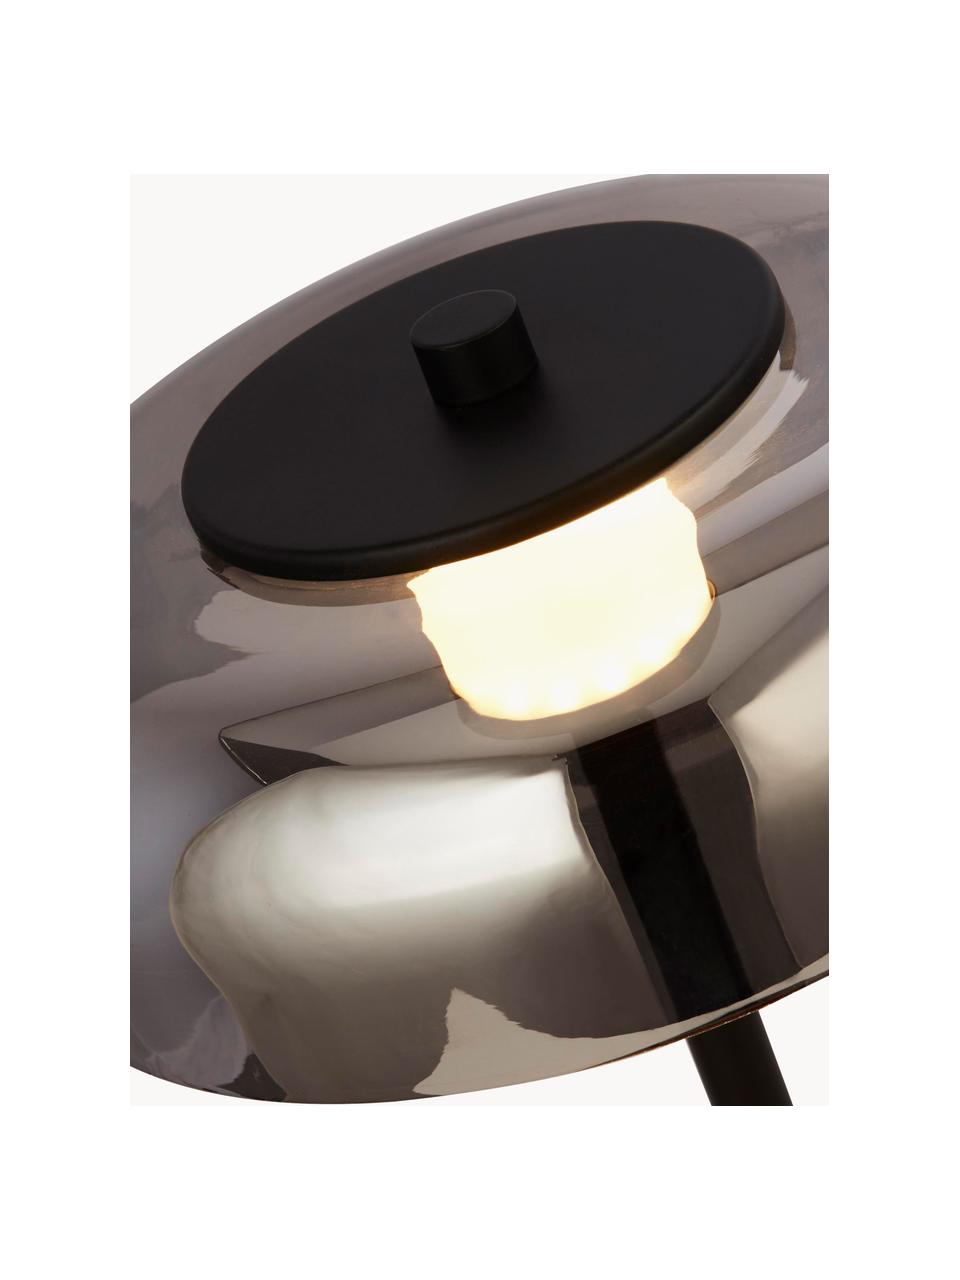 Stmievateľná stolová LED lampa zo skla Frisbee, Čierna, sivá, Ø 23 x V 40 cm